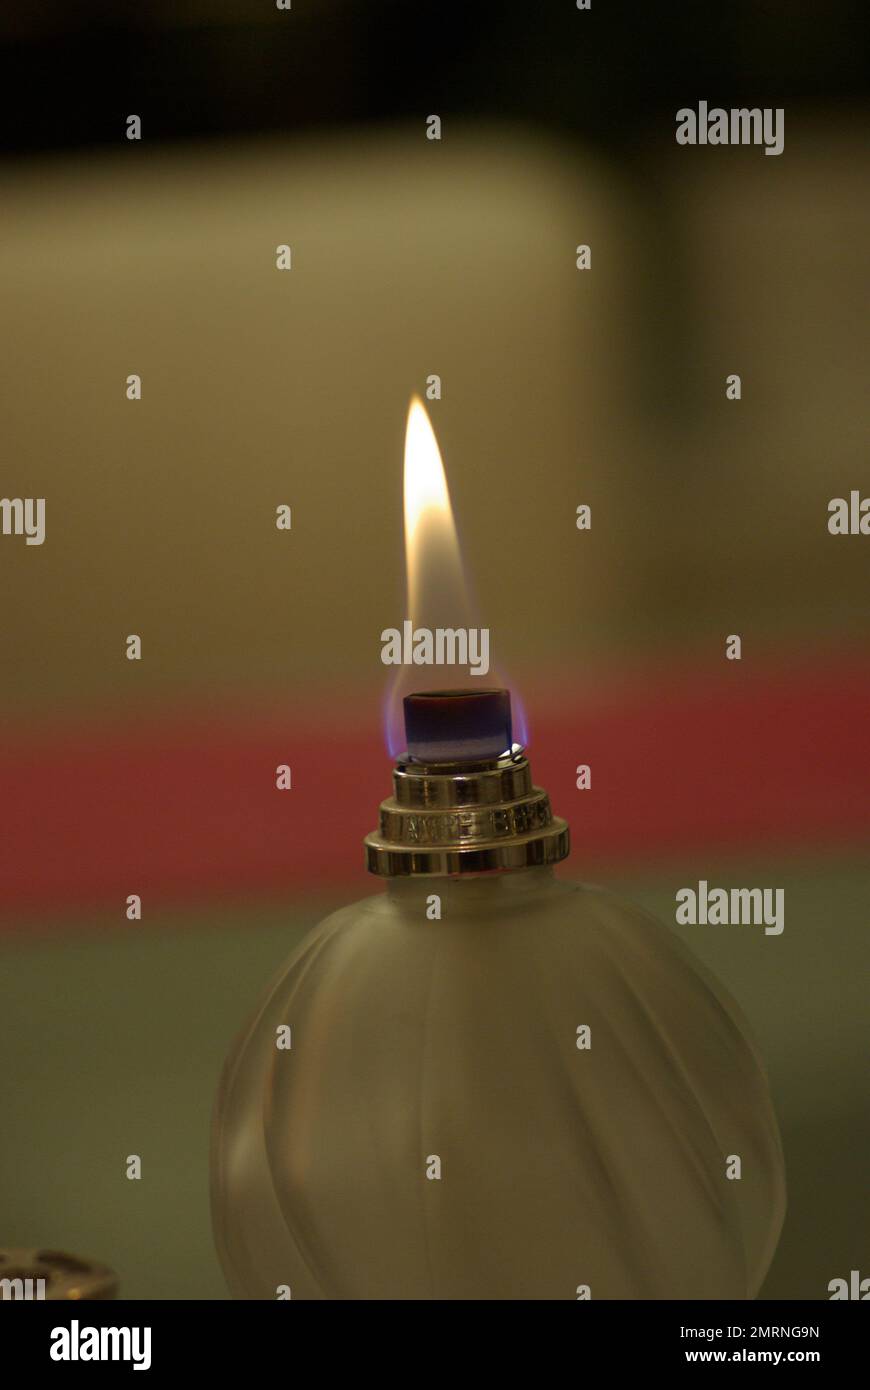 Catalytic lamp perfume diffuser 'Lampe Berger' with lighten up burner Stock Photo